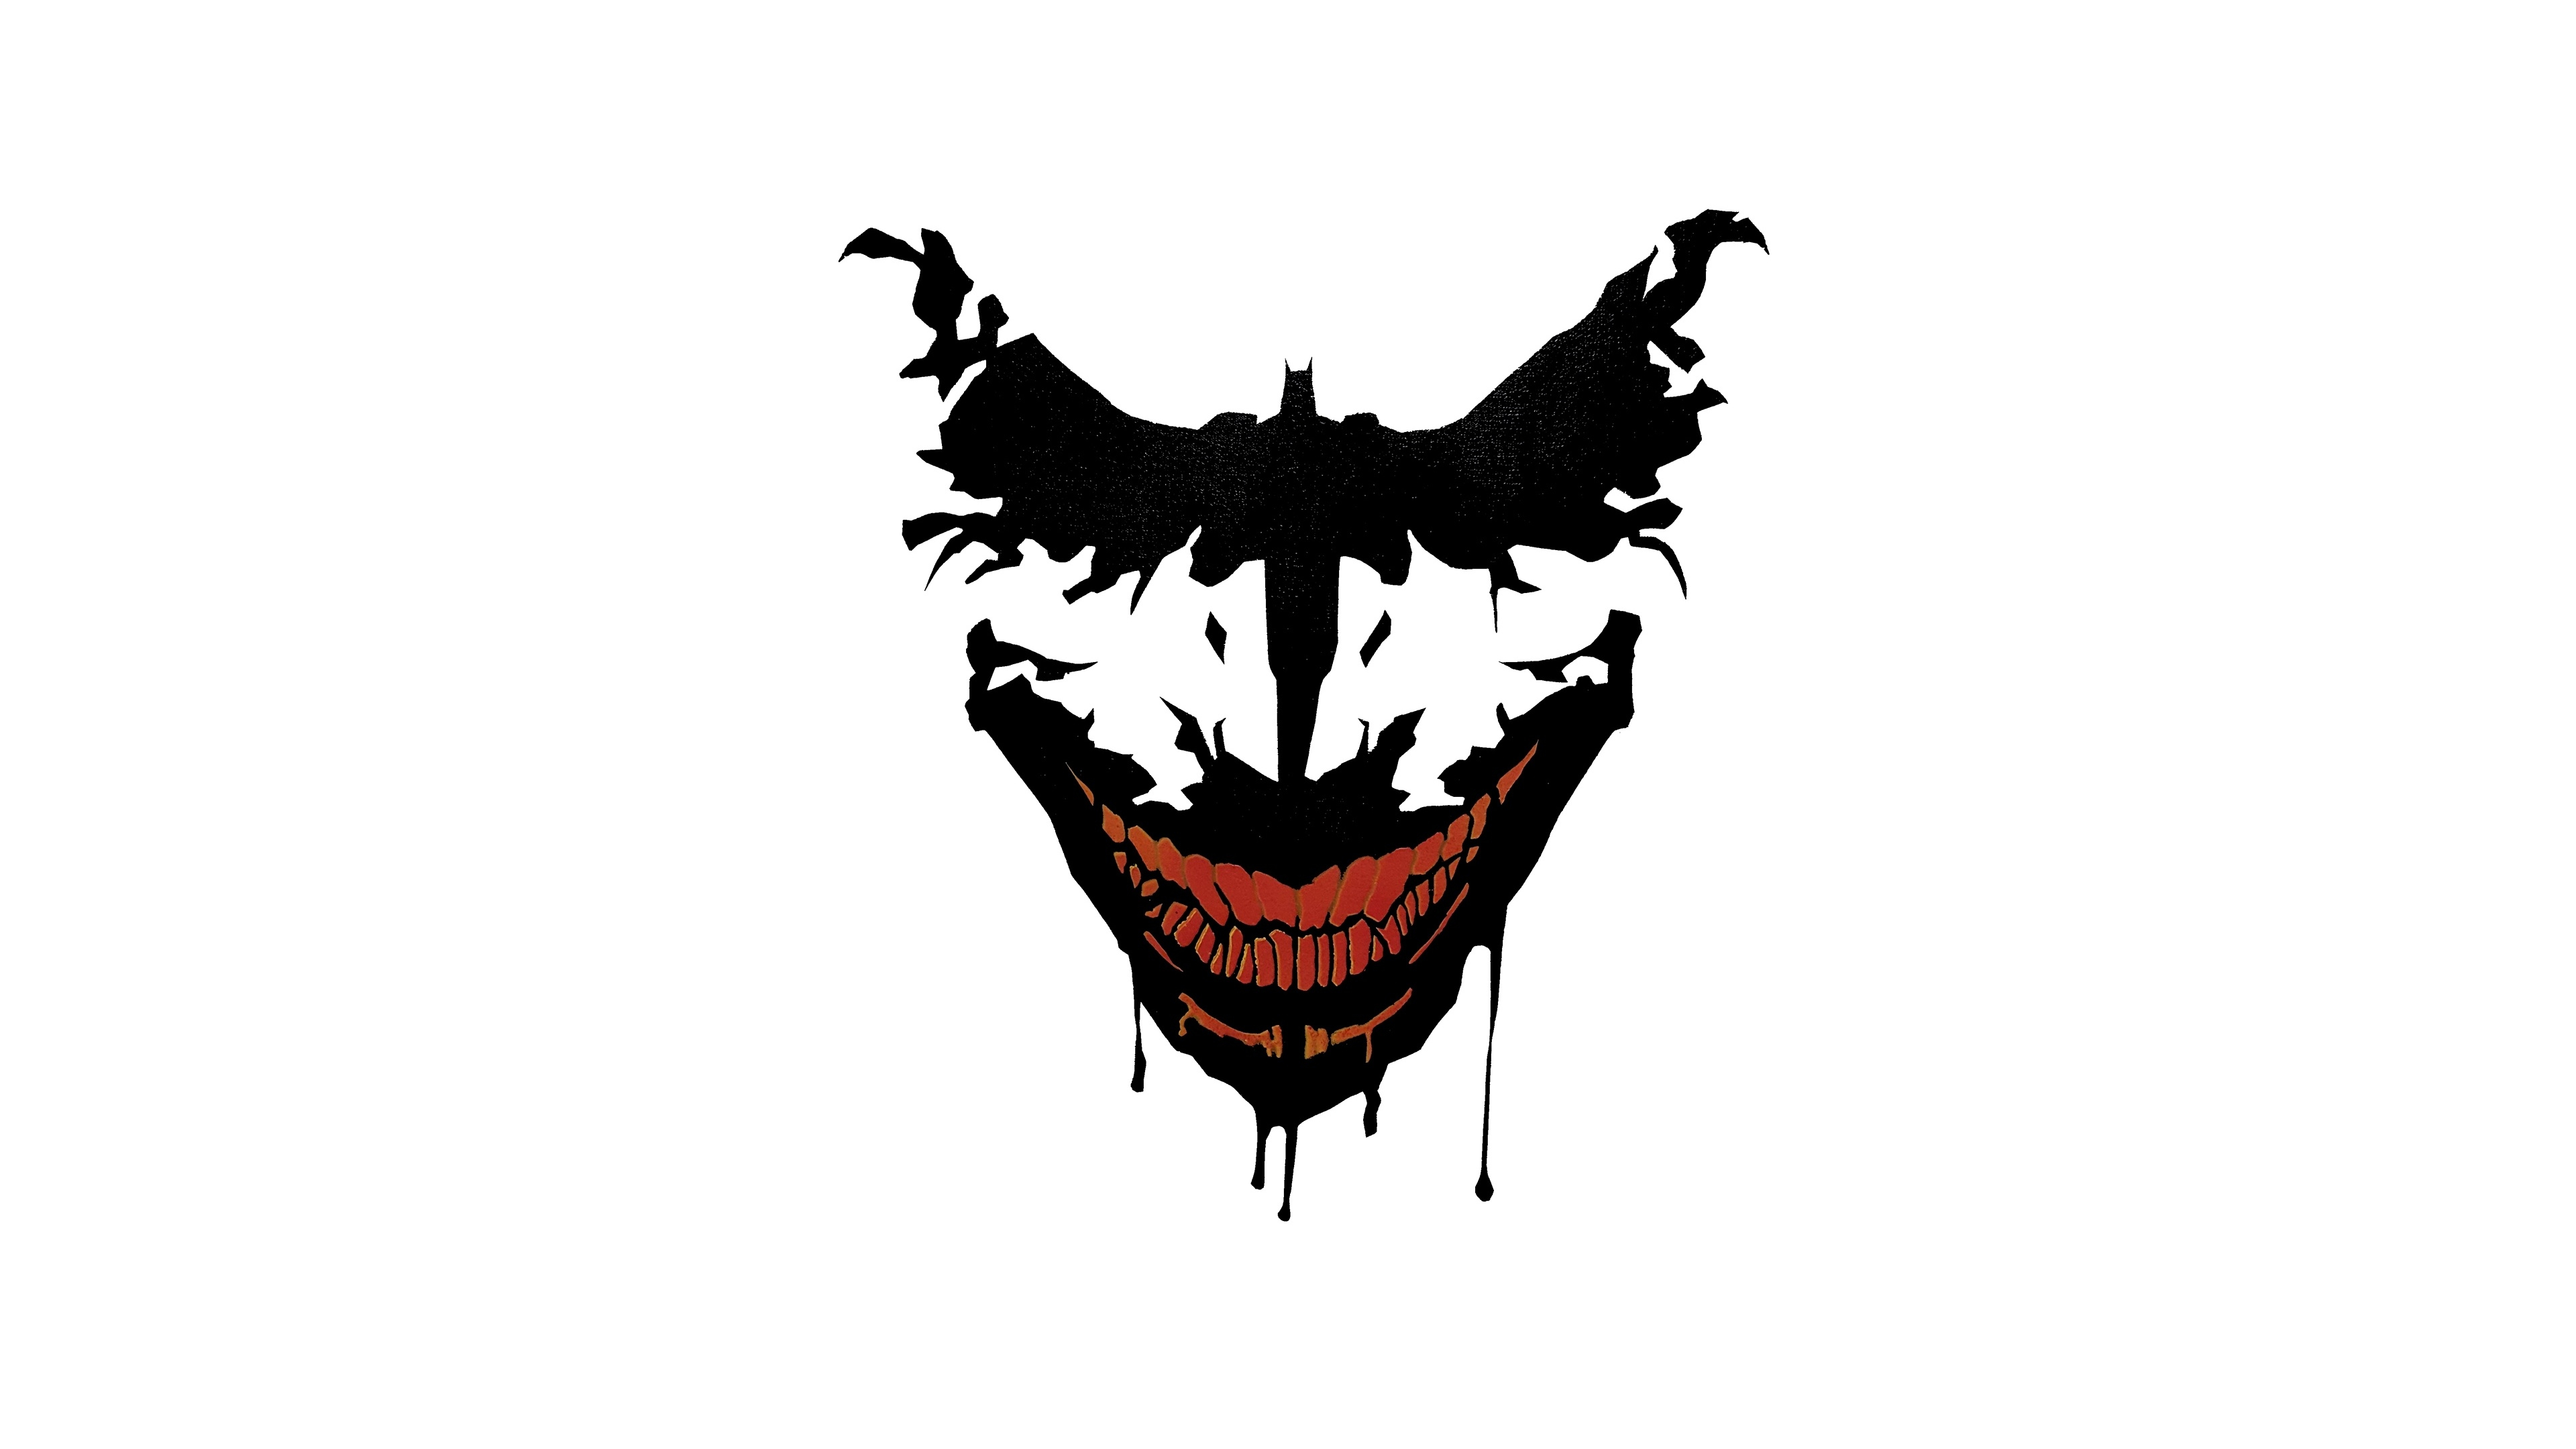 Ultra Hd Joker Wallpapers For Mobile Download